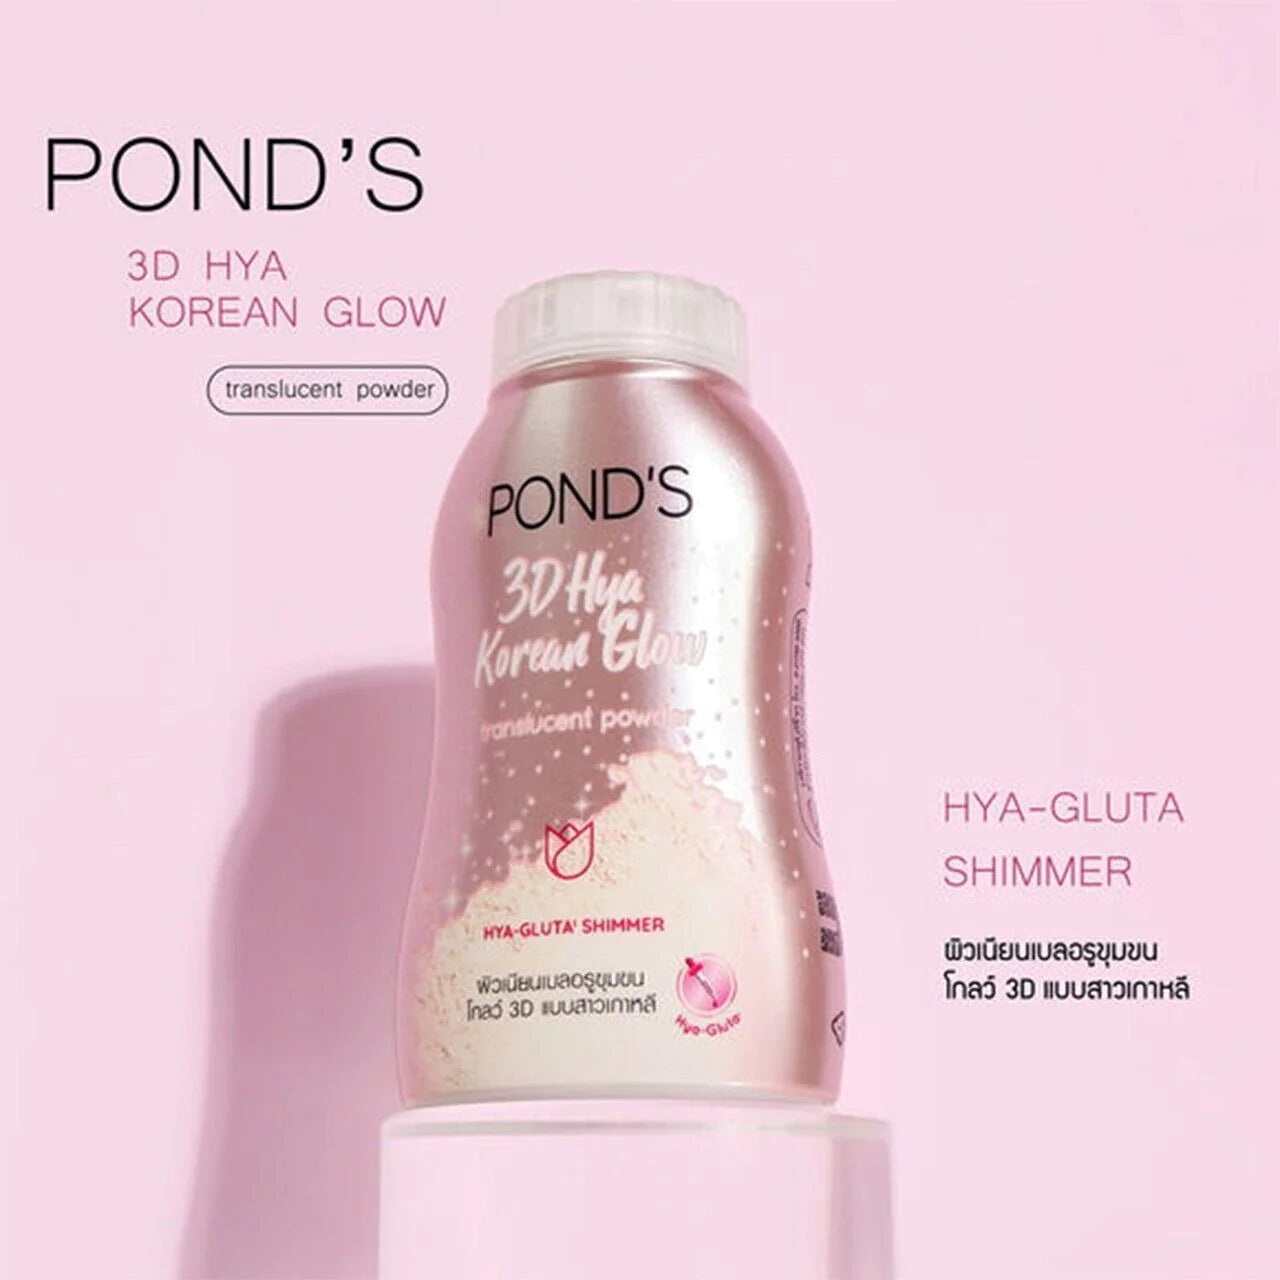 Pond's 3D HYA Korean Glow Translucent Facial Powder (HYA-GLUTA Shimmer) 50g